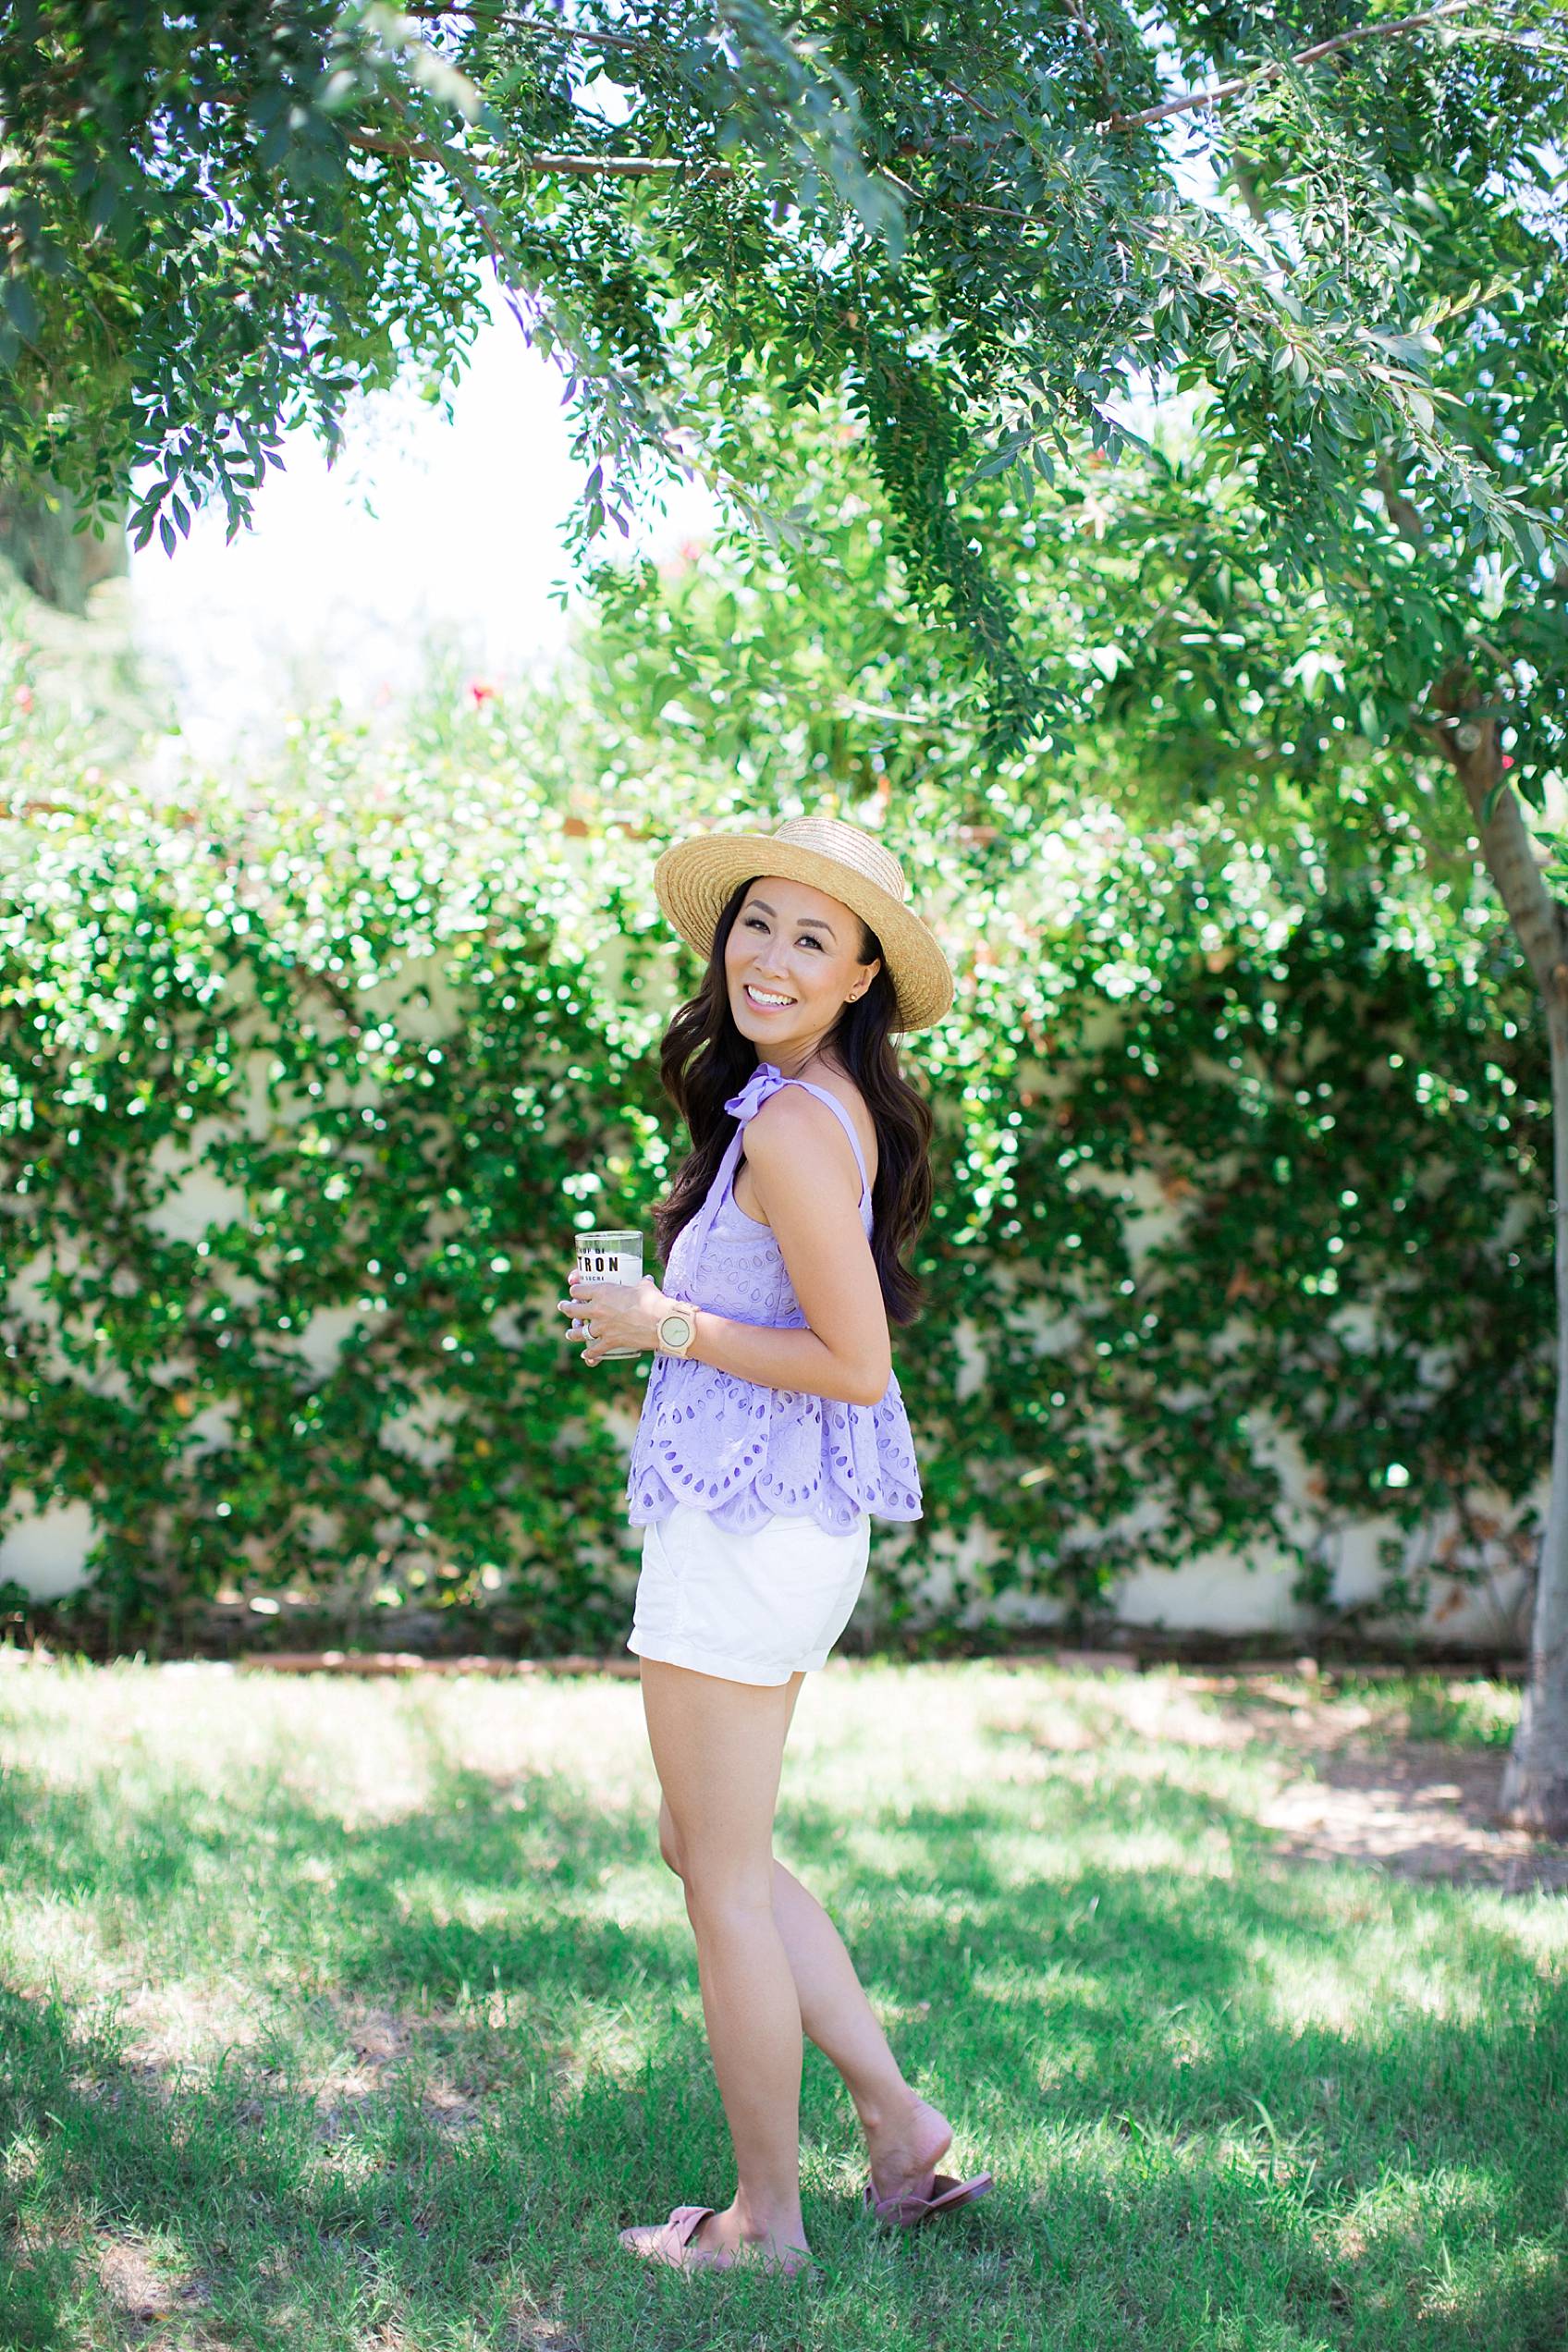 Lifestyle blogger diana elizabeth in purple eyelet top by j.crew in backyard jasmine vine wall holding glass of lemonade